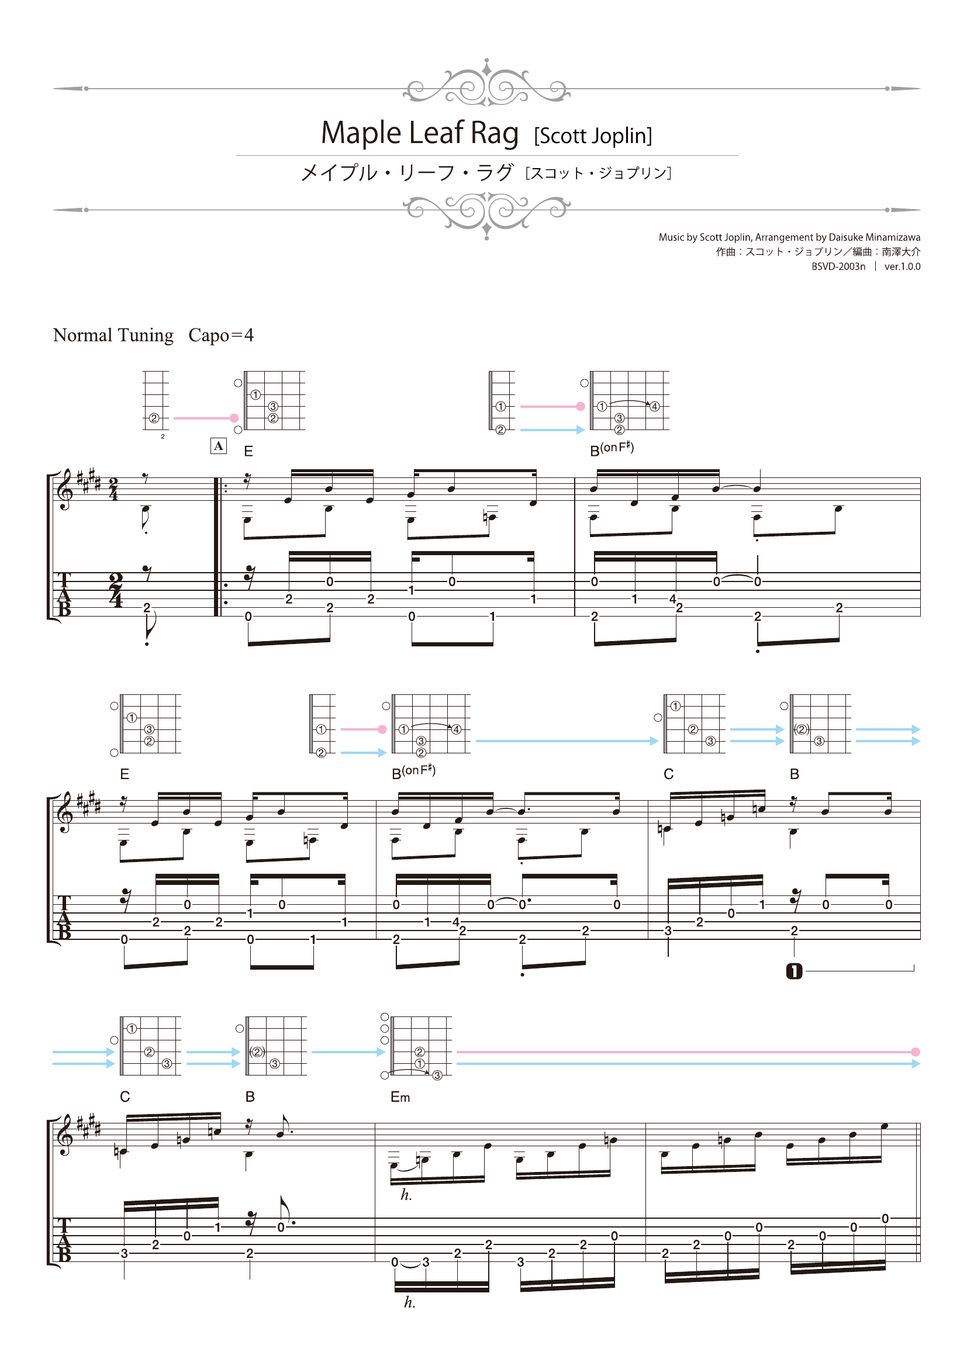 Scott Joplin - Maple Leaf Rag (Solo Guitar) by Daisuke Minamizawa